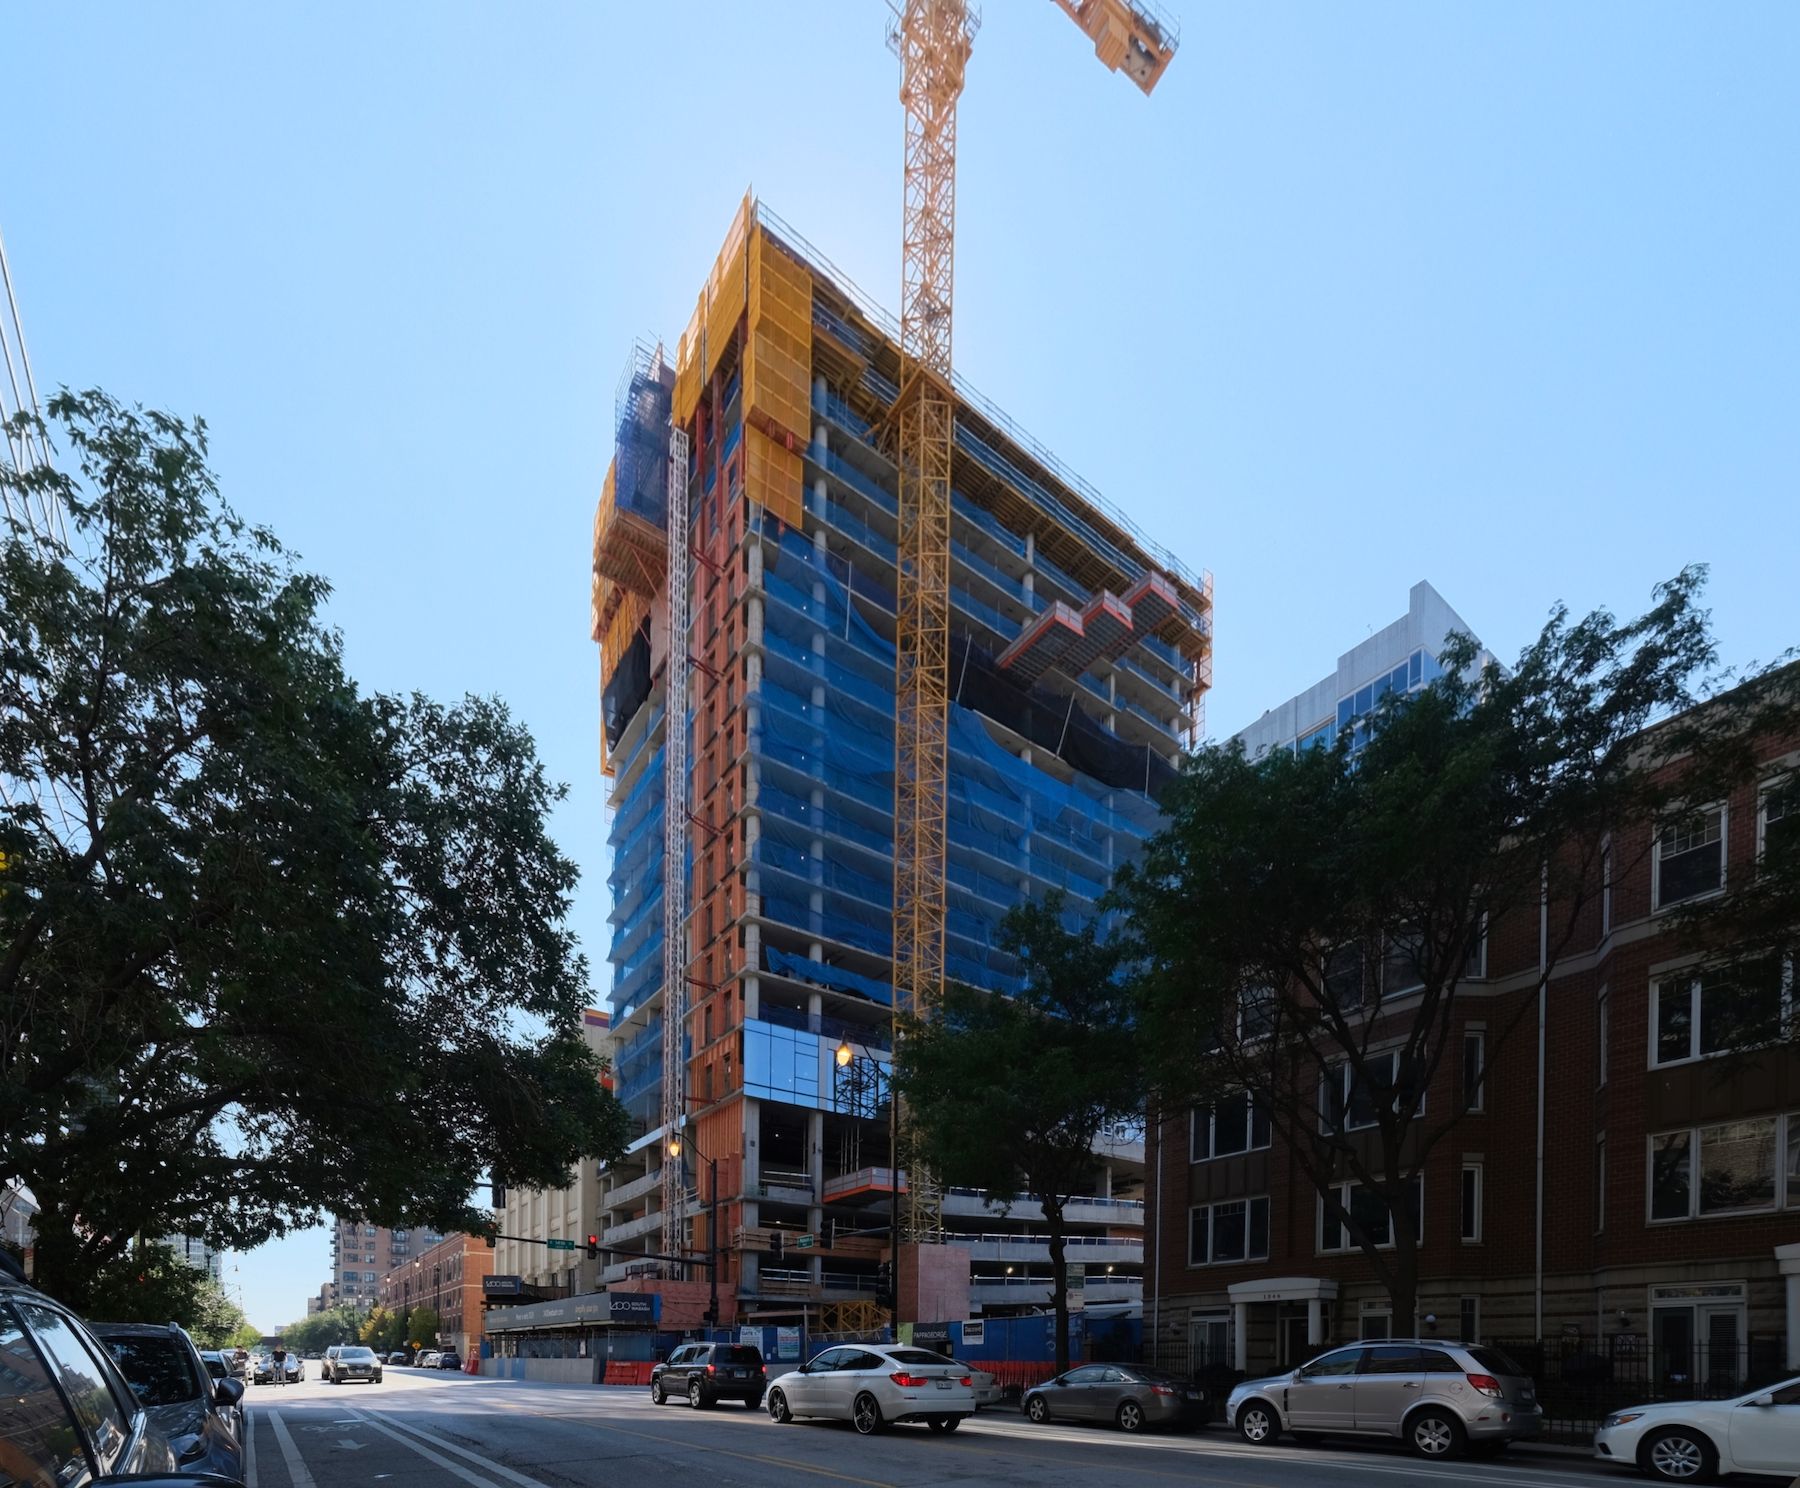 Facade Installation Begins for 1400 S Wabash Avenue in South Loop